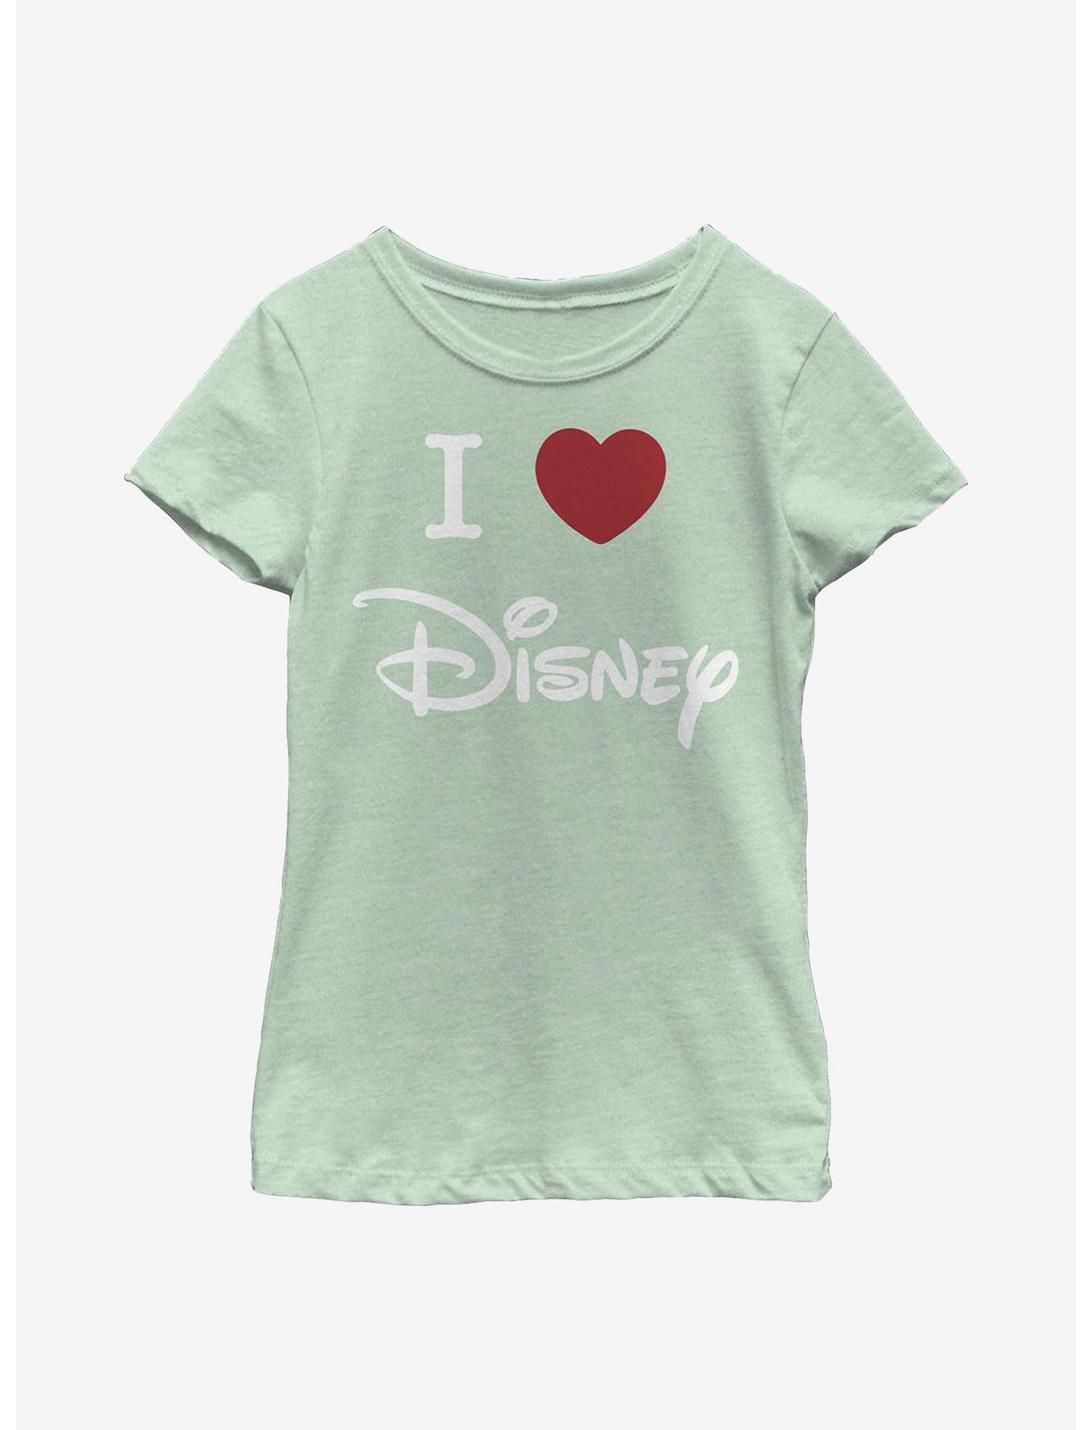 Disney Classic I Heart Disney Youth Girls T-Shirt, MINT, hi-res